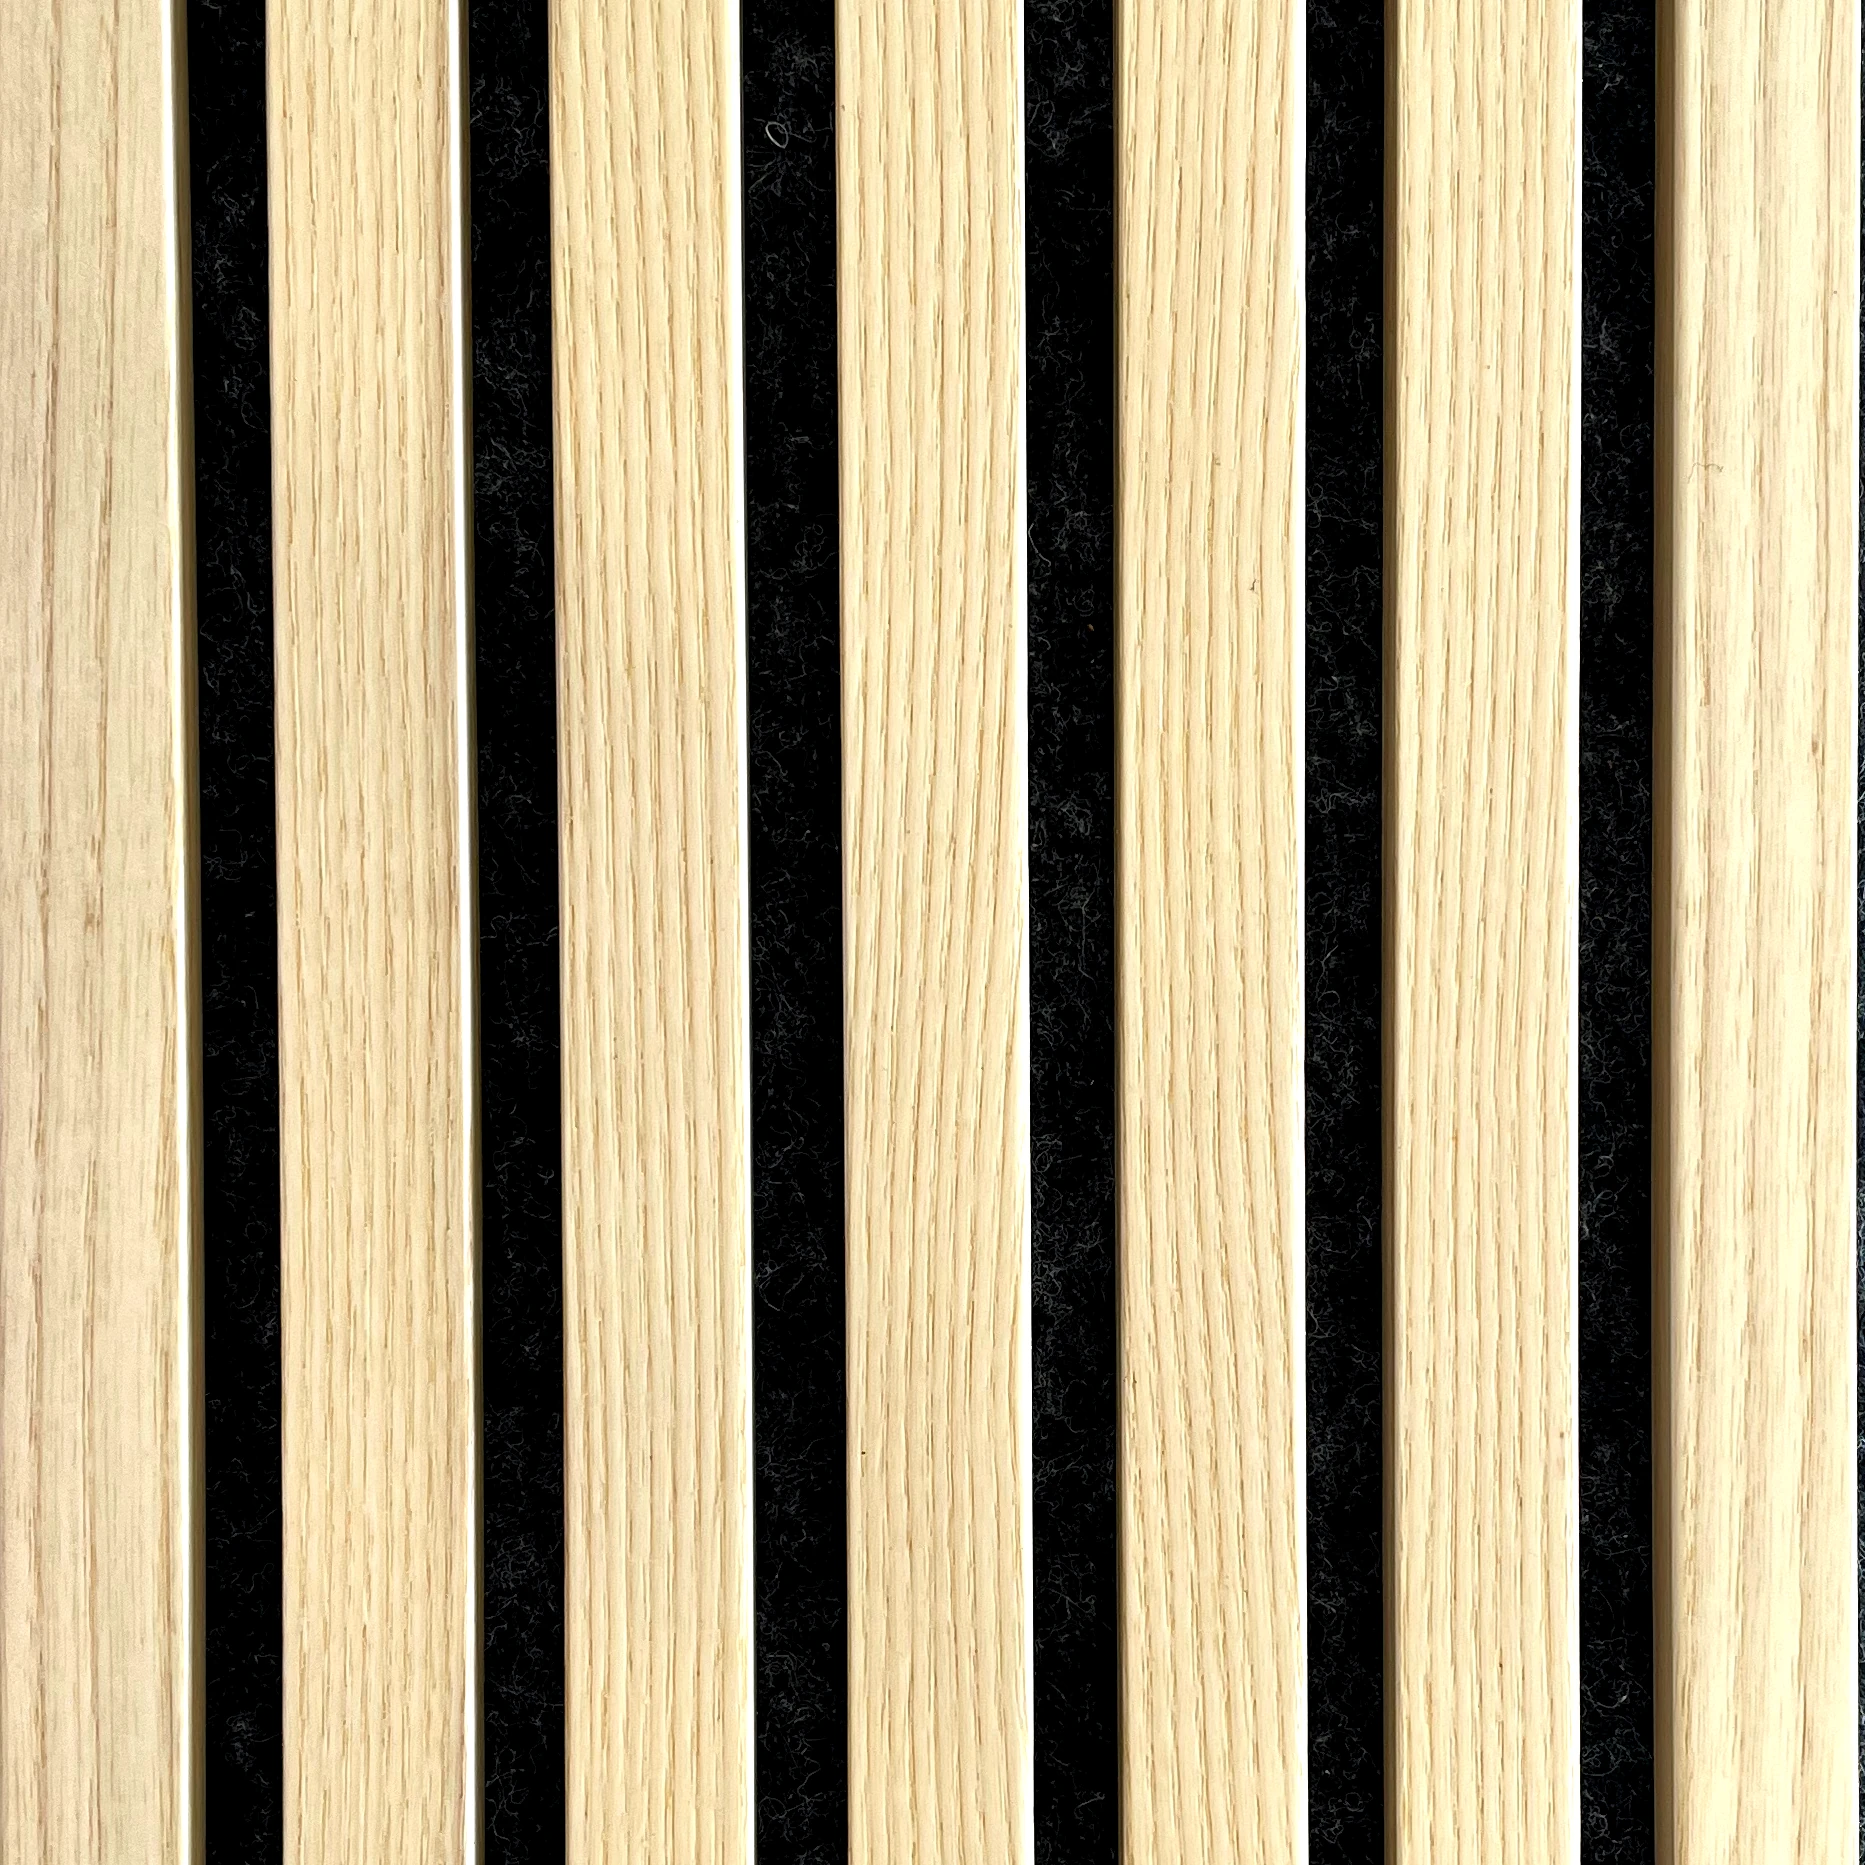 Akkustik Wandverkleidung mit Echtholzlatten aus Esche